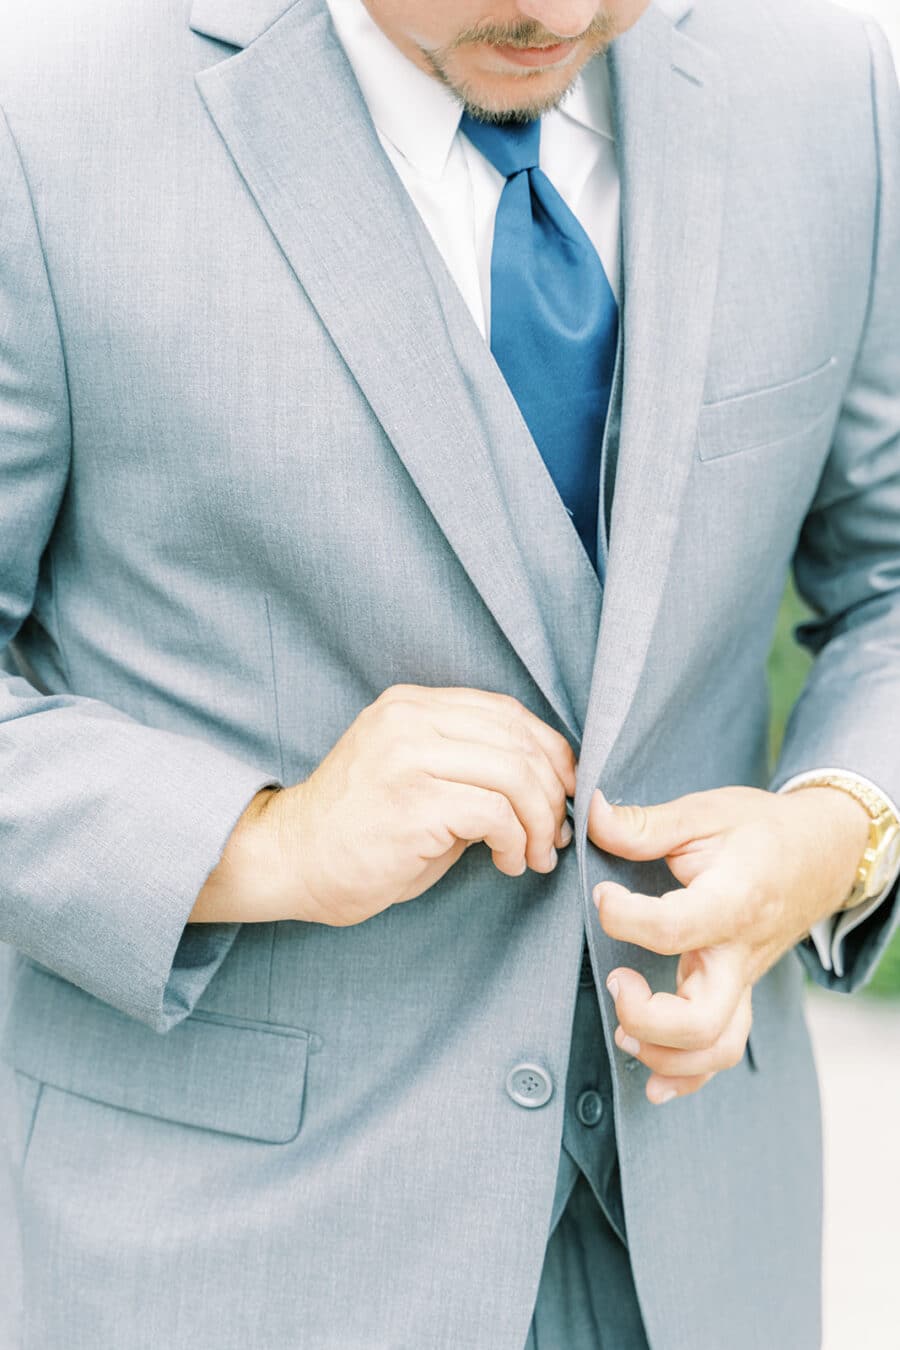 Gray wedding tuxedo with blue tie | Nashville Bride Guide